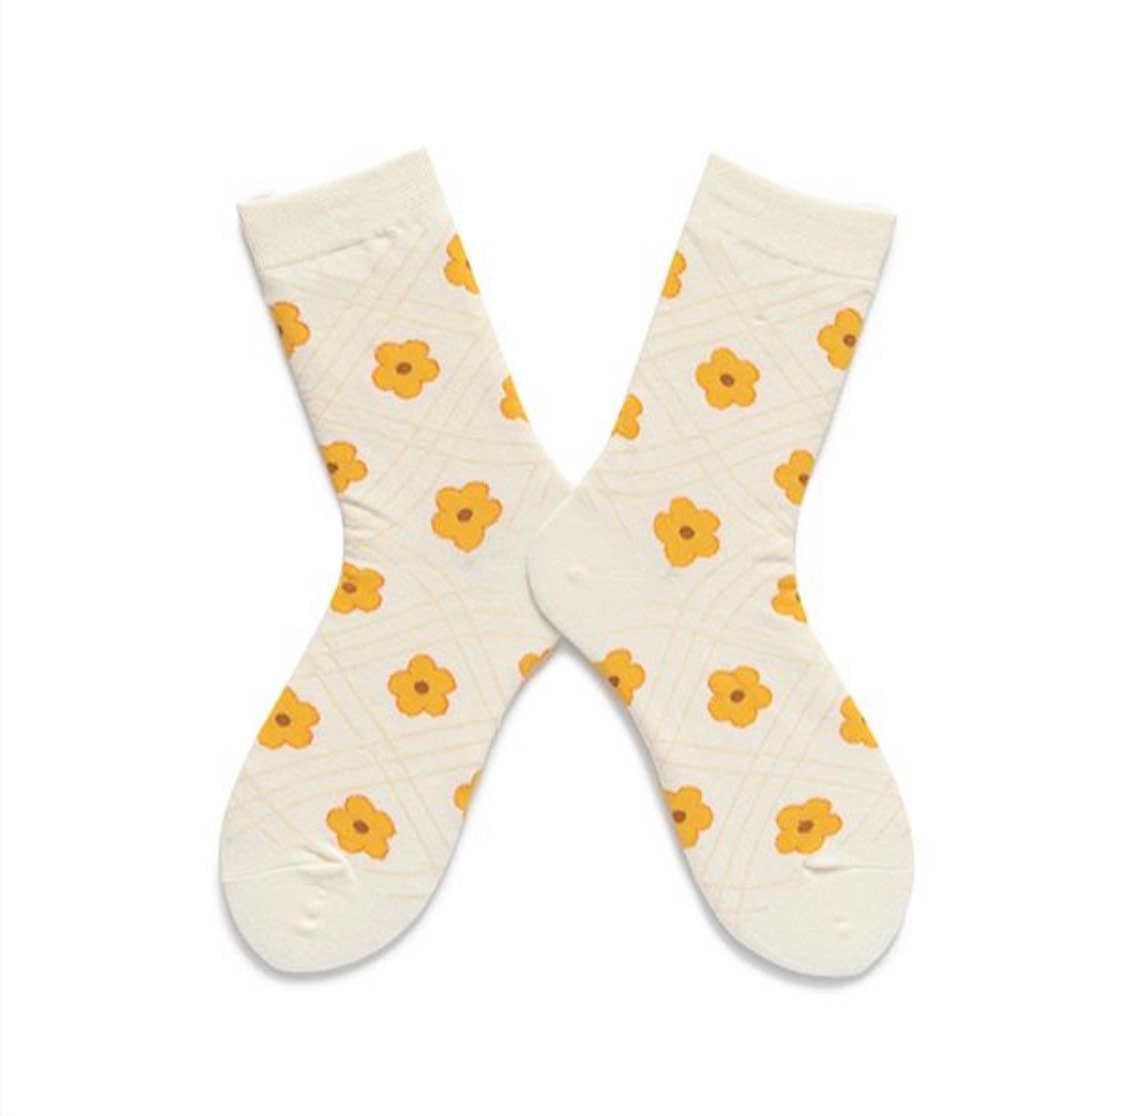 Miss June’s, Cute socks,colorful socks,cool socks,patterned socks,geometric socks,women’s cotton socks